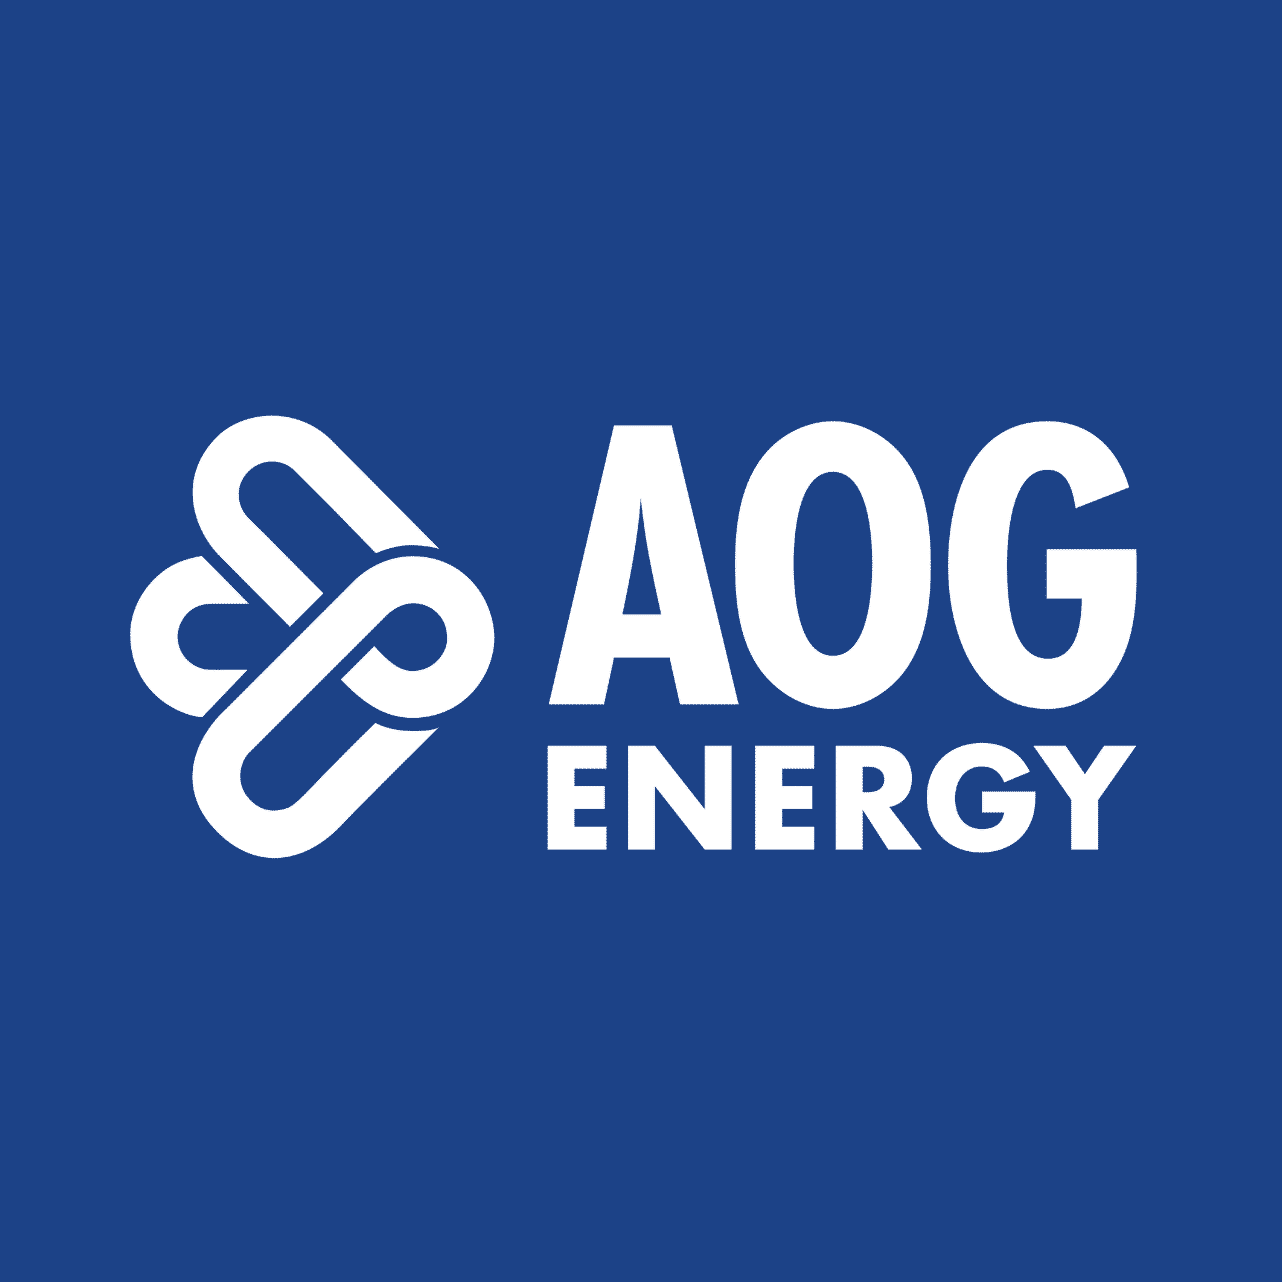 AOG Energy